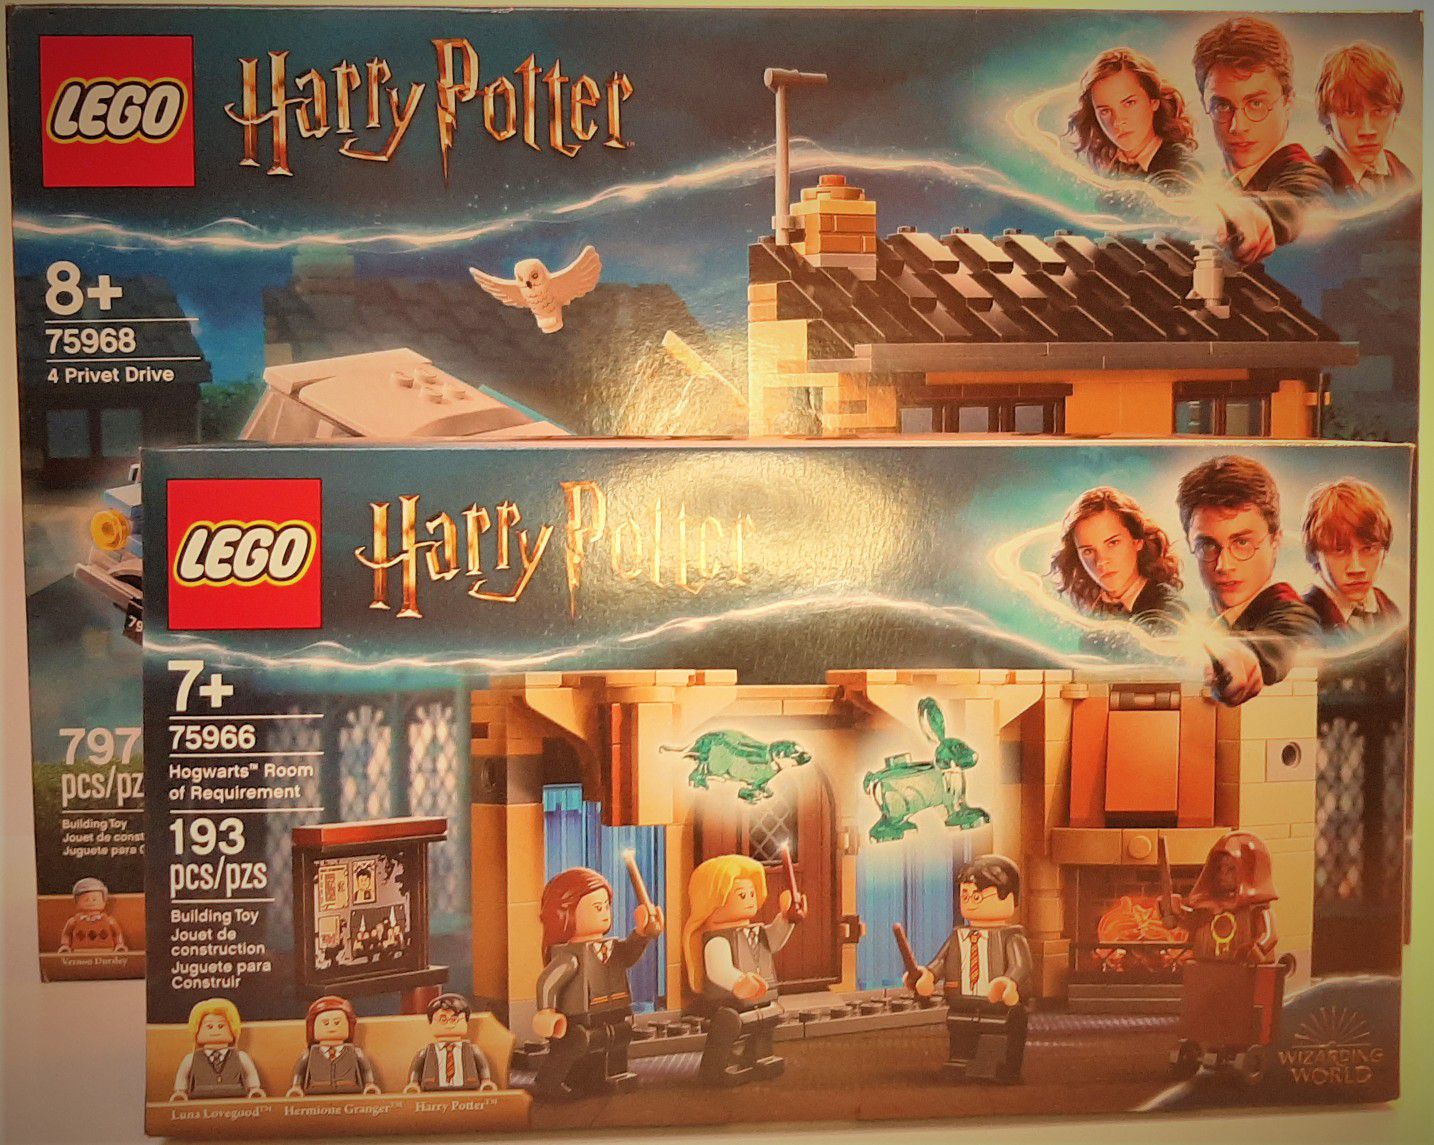 Lego Harry Potter Lot of 2 ~ 4 Privet Dr & Hogwarts Room of Requirement NIP